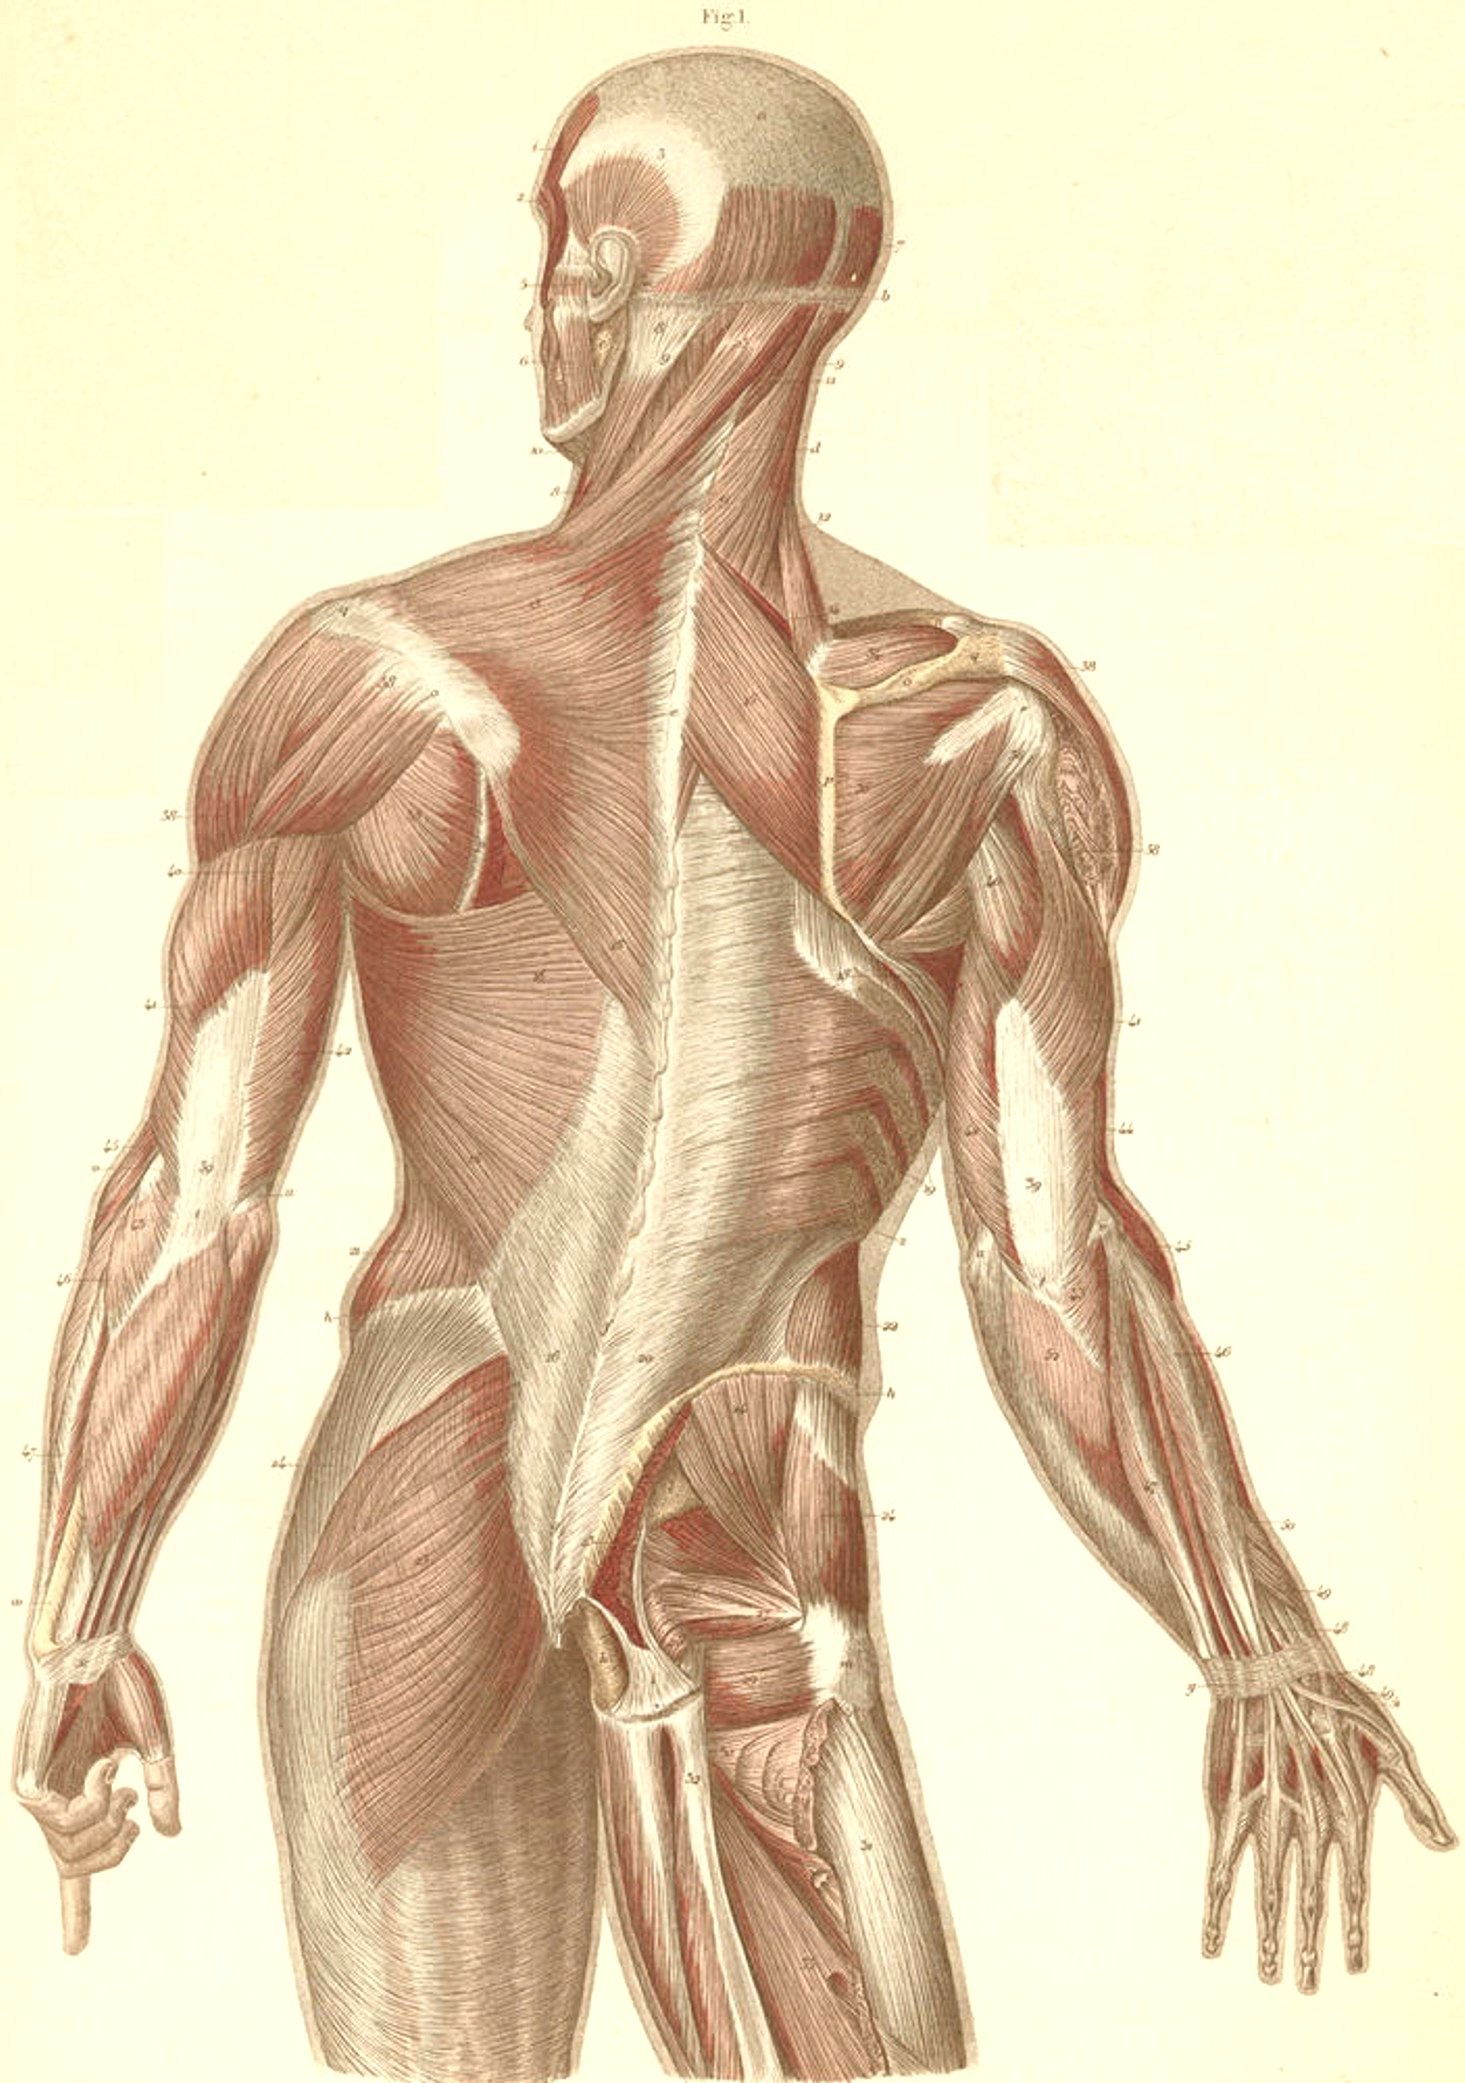 Мышцы картинка. Мышцы человека. Мышечный скелет. Мышечная анатомия человека. Анатомия мышечной системы.